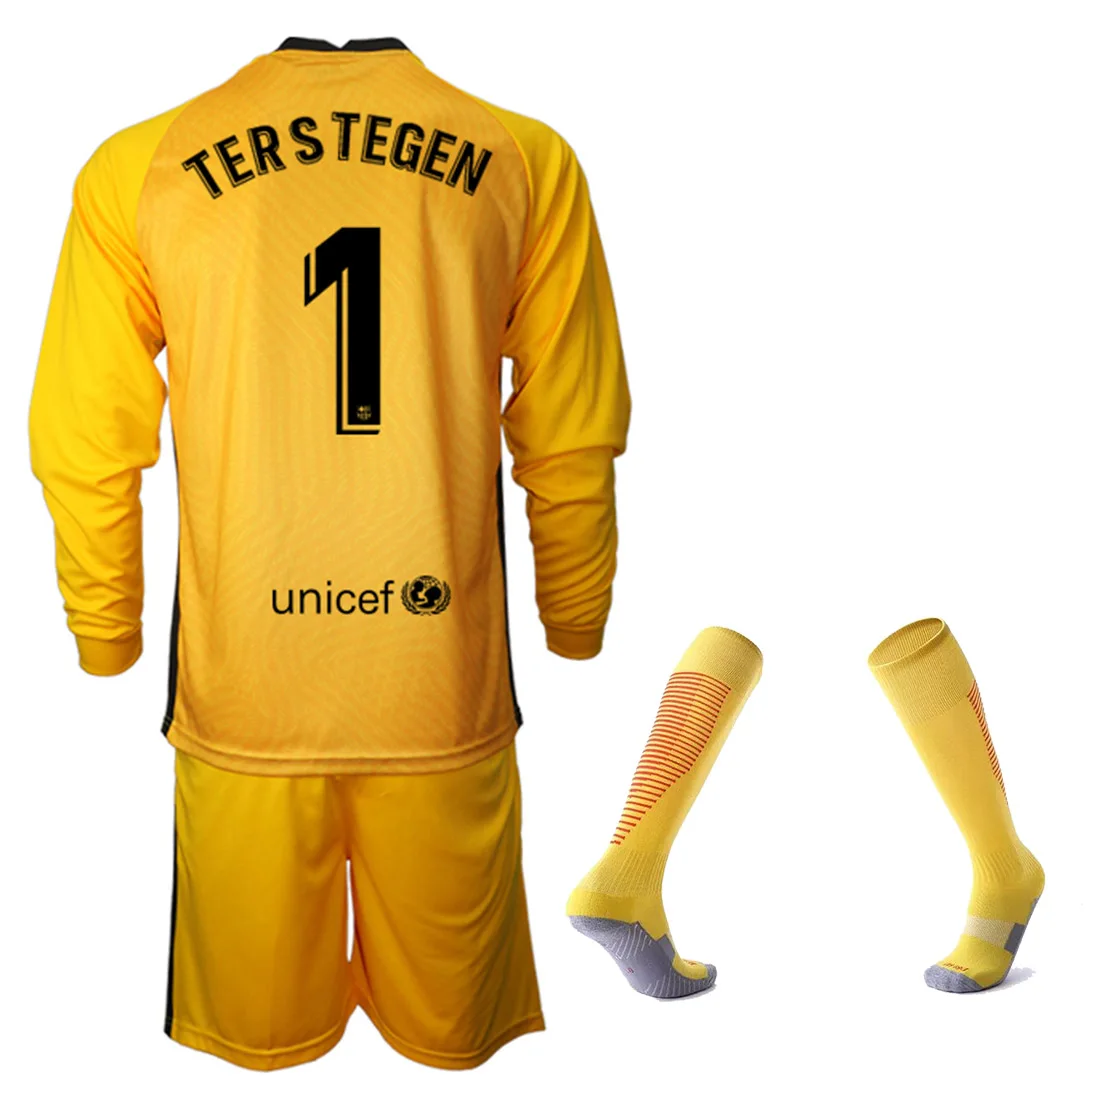 

20-21Goalkeeper football jersey #1 Ter Stegen child youth kids jersey long-sleeved short-sleeved suit training wear F.C.B Yellow